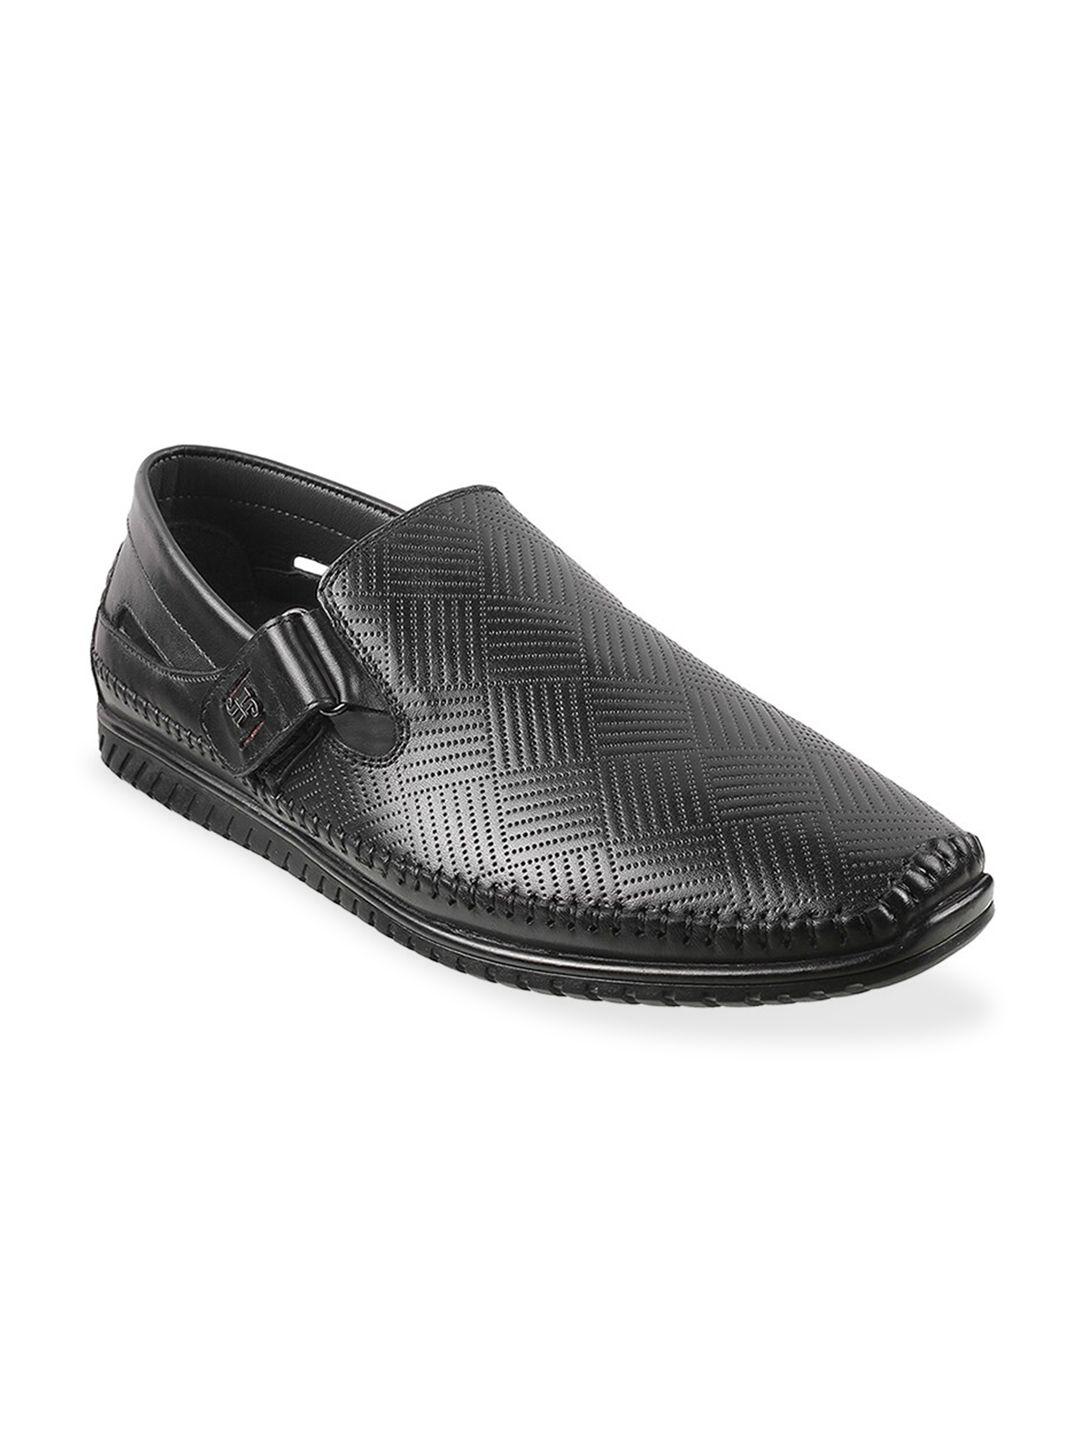 j fontini men black leather comfort slip-on sandals